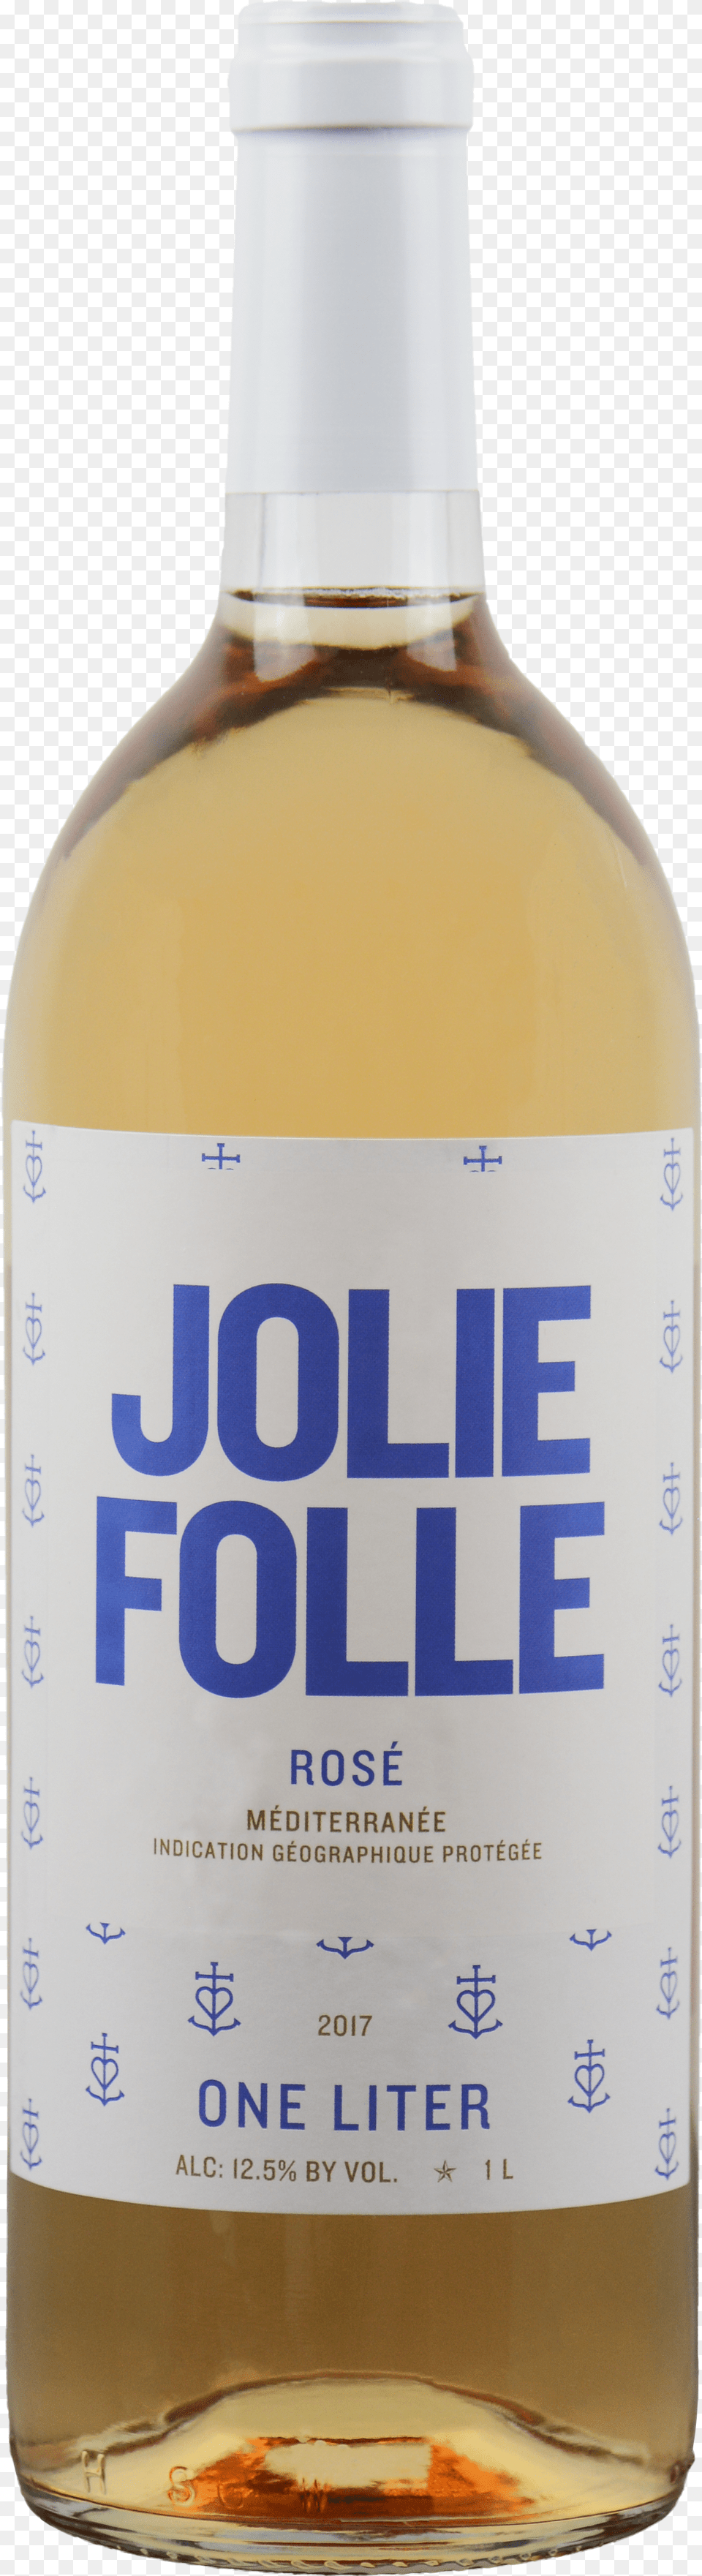 Bottle Shots Jolie Folle Rose, Accessories, Formal Wear, Tie, Food Png Image